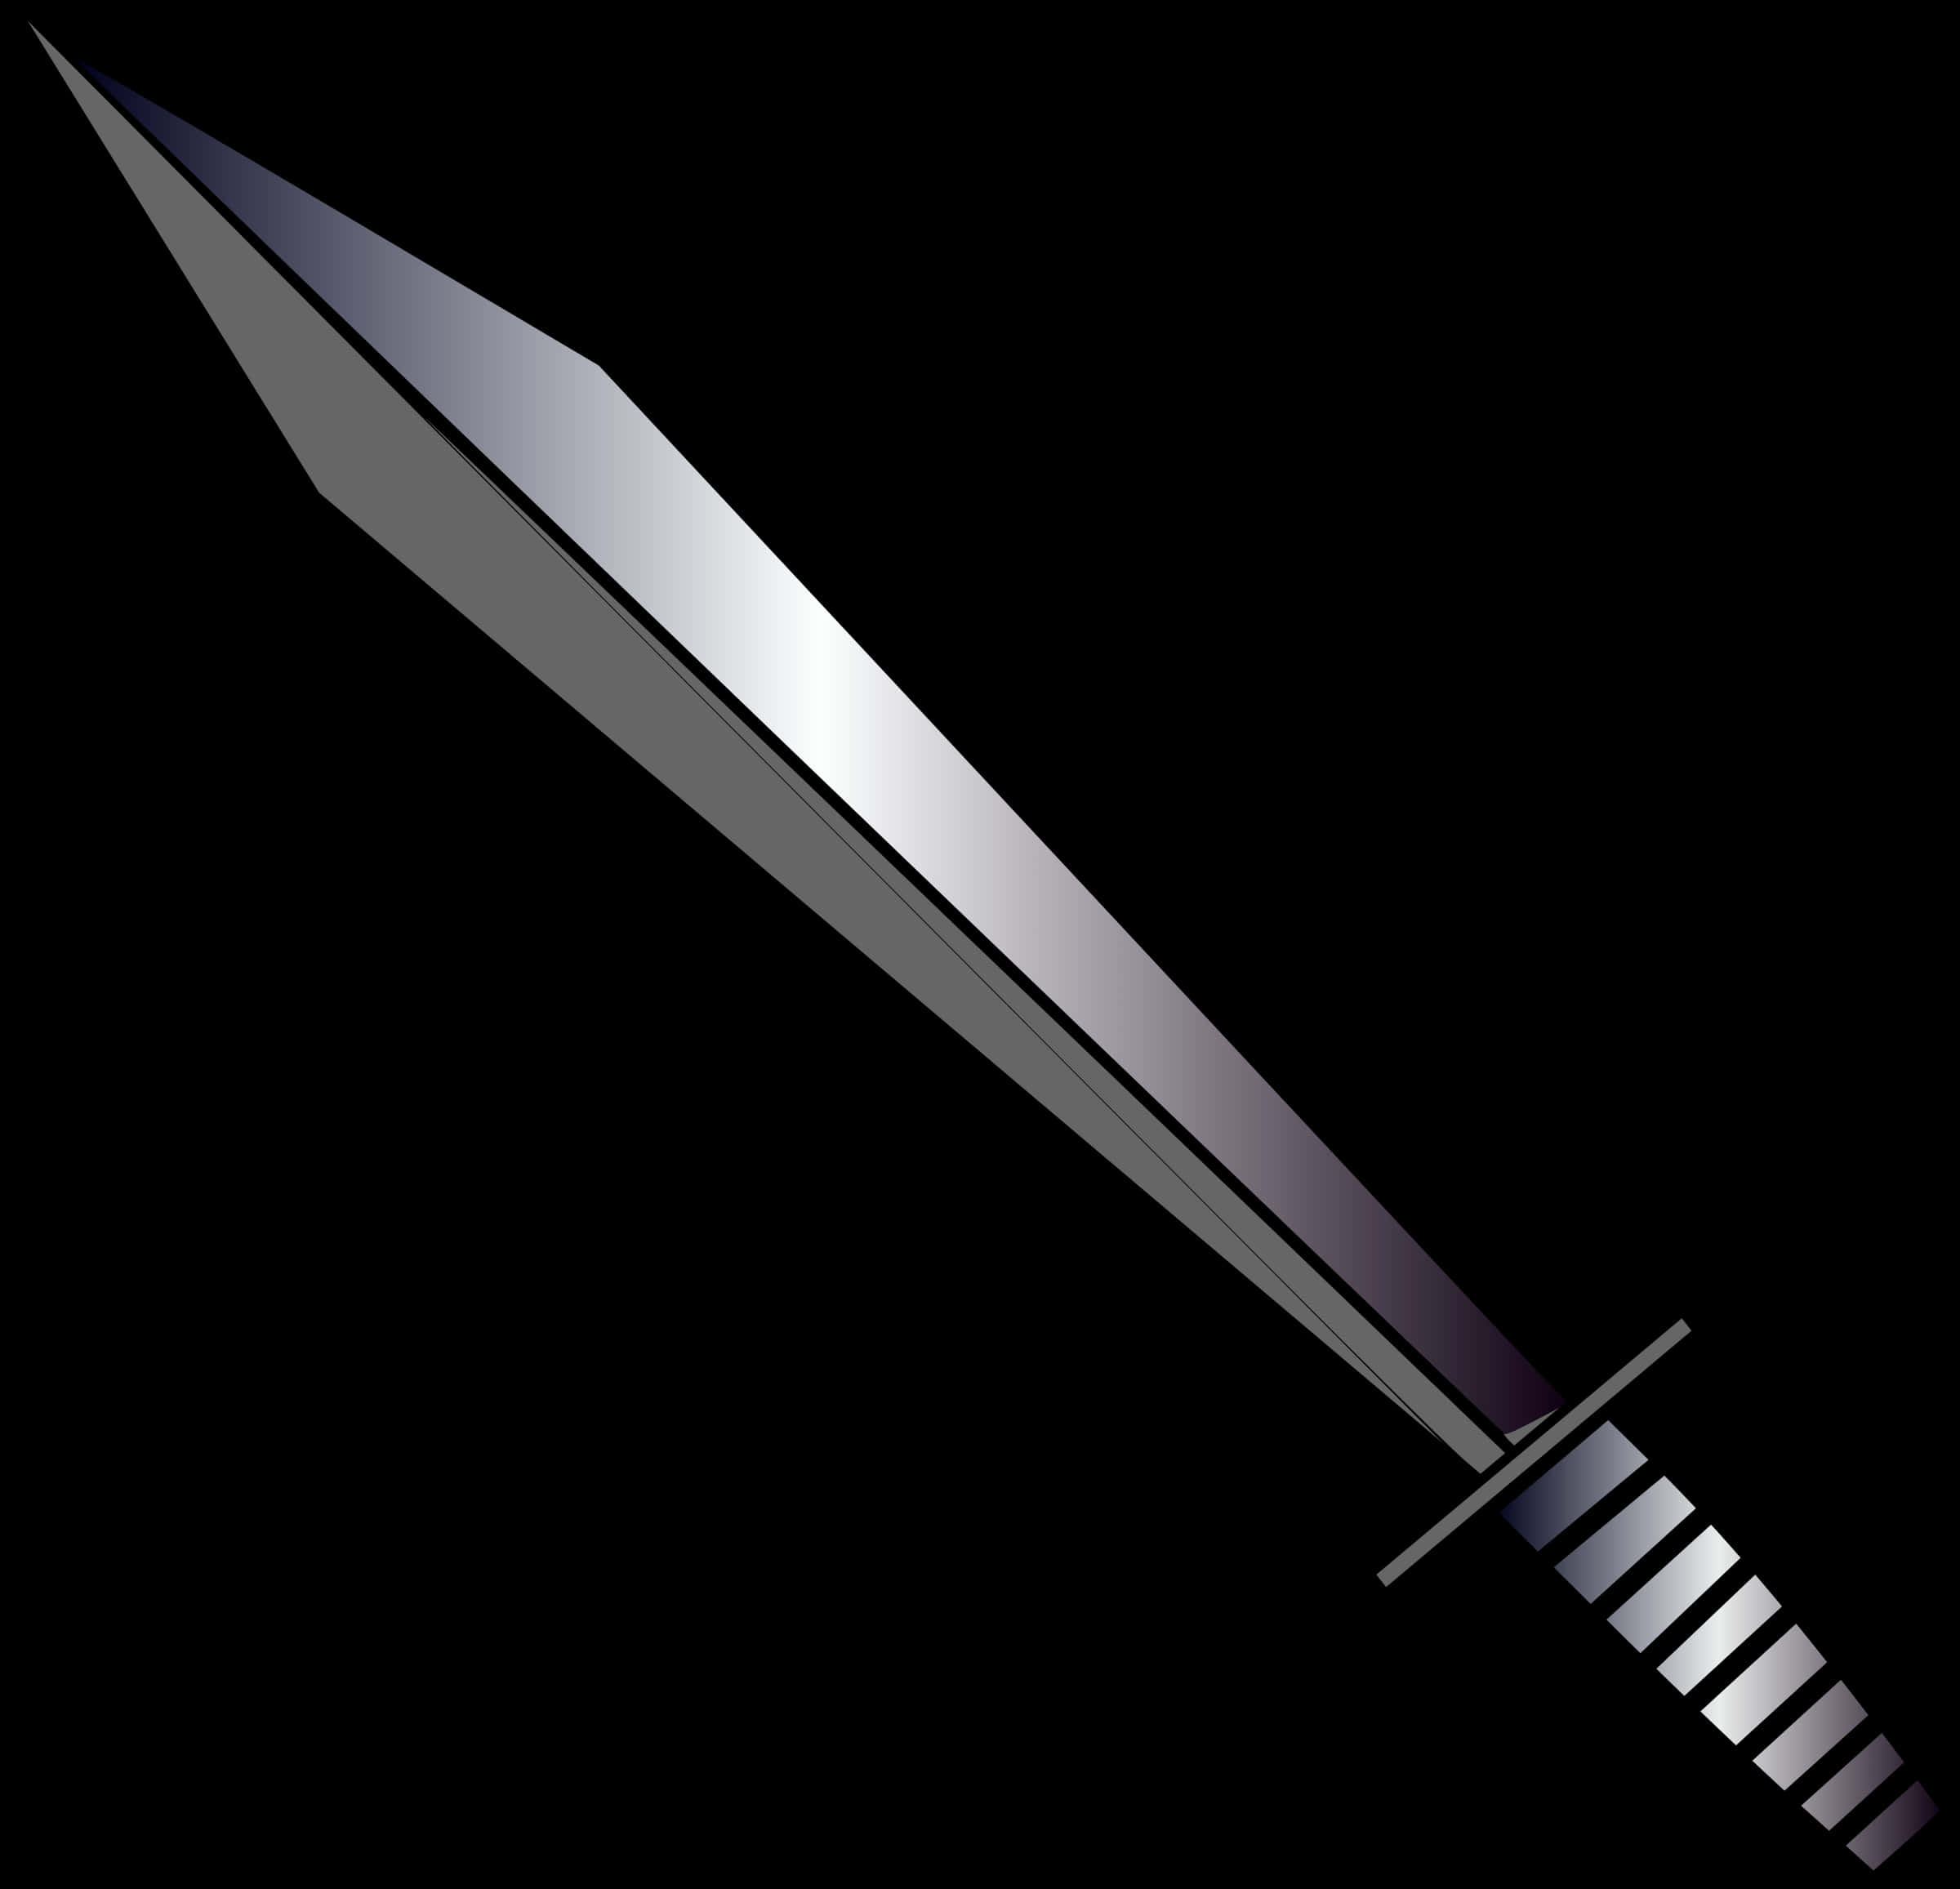 A Sword With A Sharp Blade